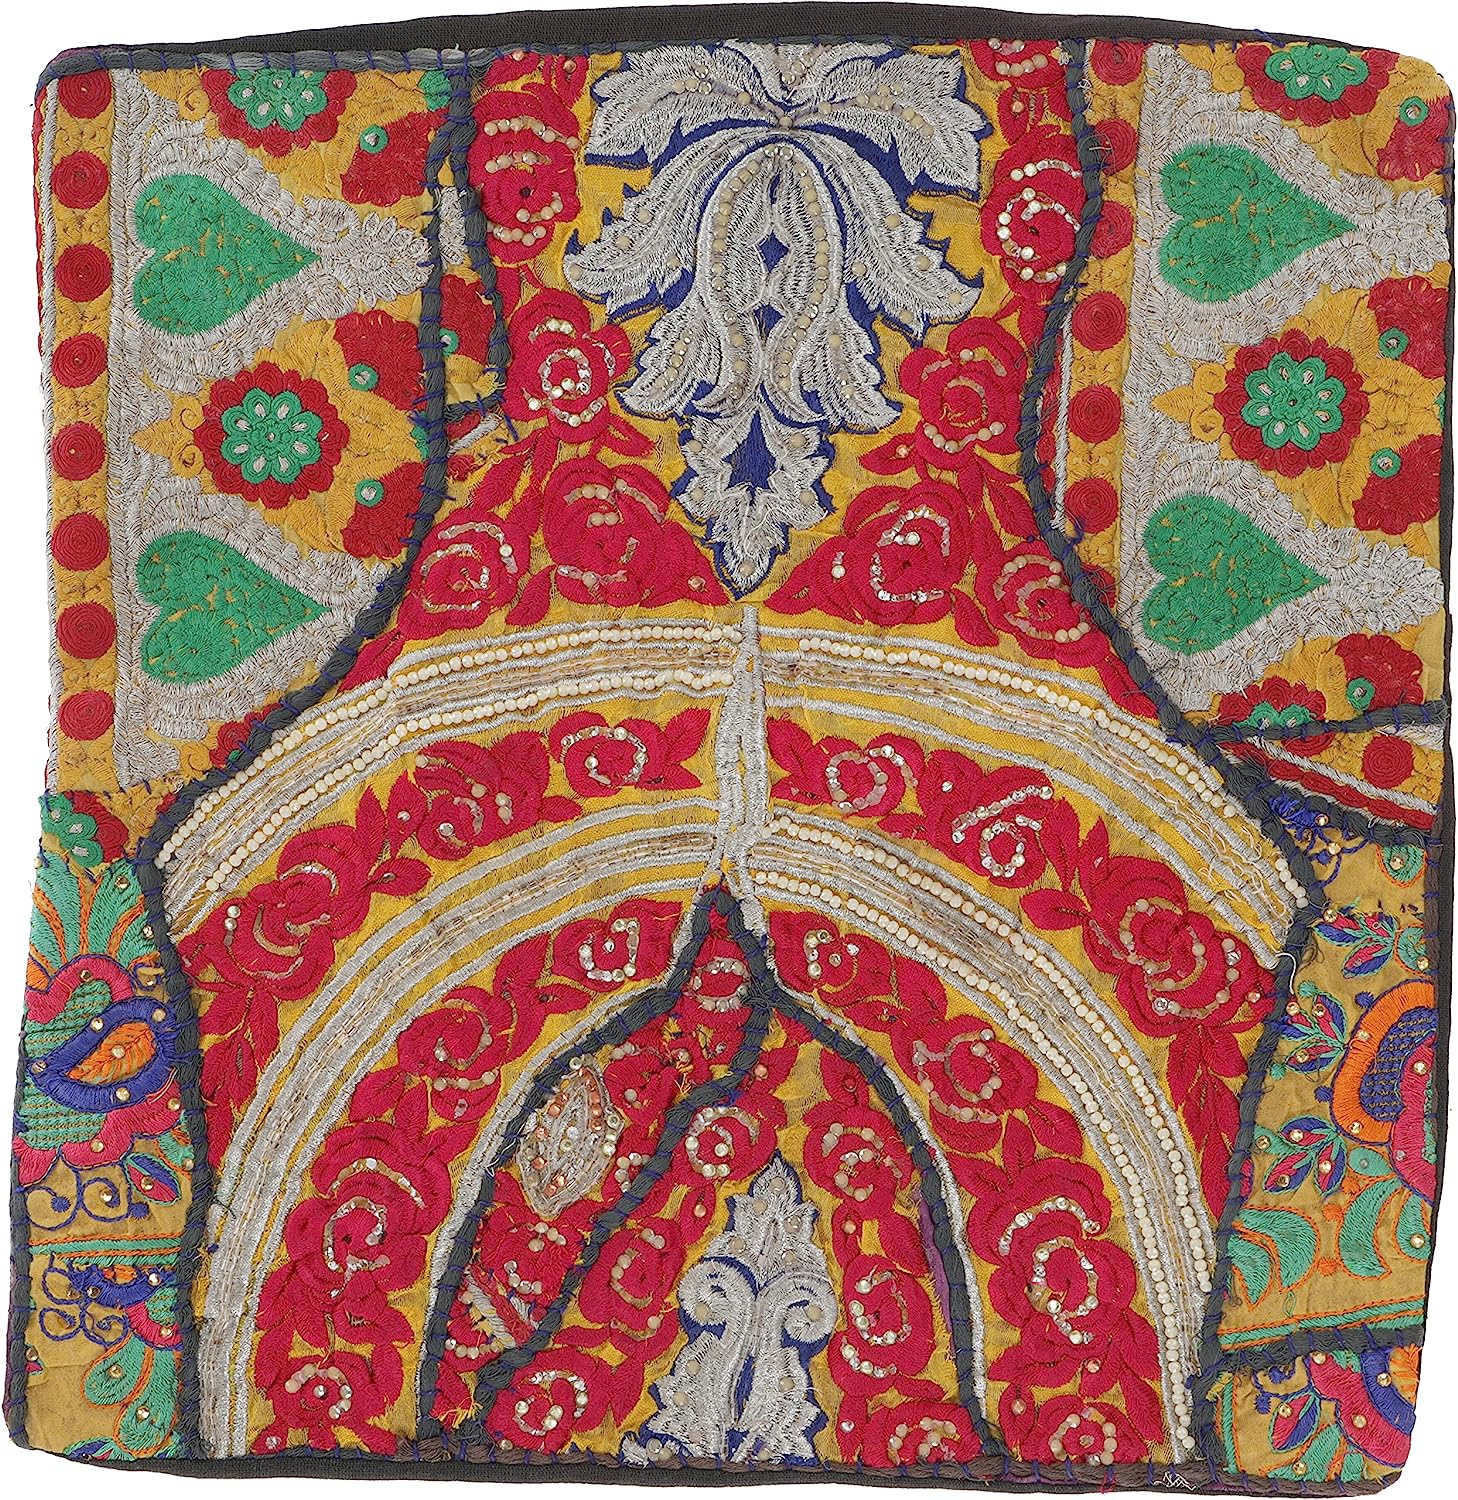 GURU SHOP Patchwork Cushion Cover Rajasthan Decorative Cushion Cover Single Piece - Pattern 3 Red Cotton 40 x 40 cm